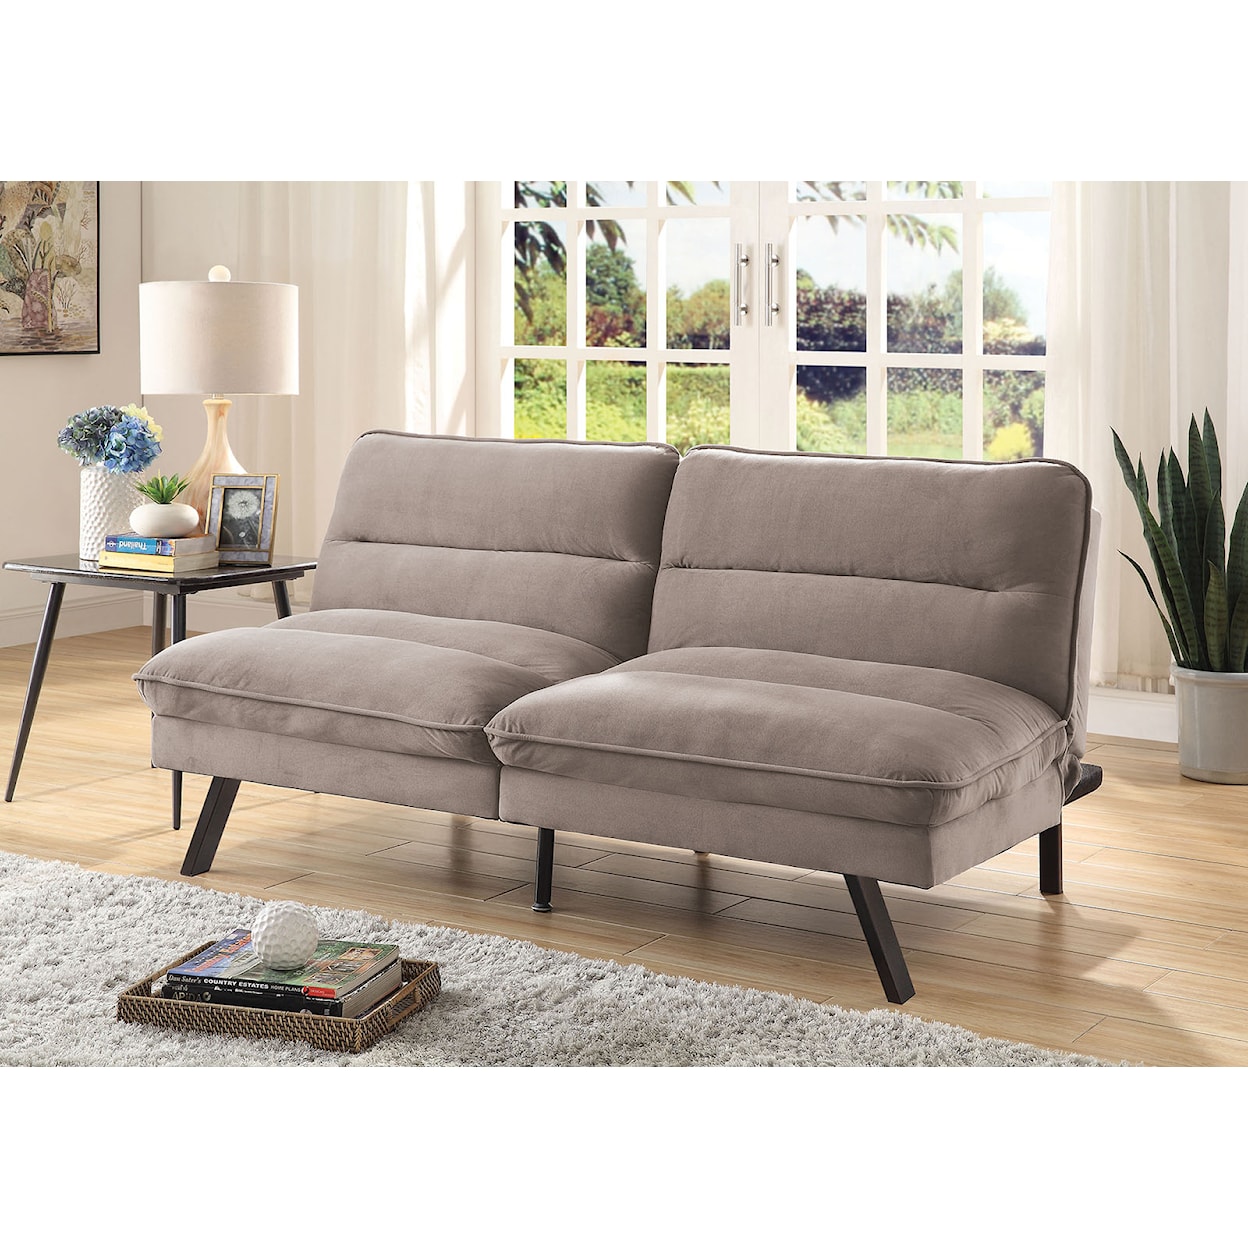 Furniture of America Maryam Futon Sofa